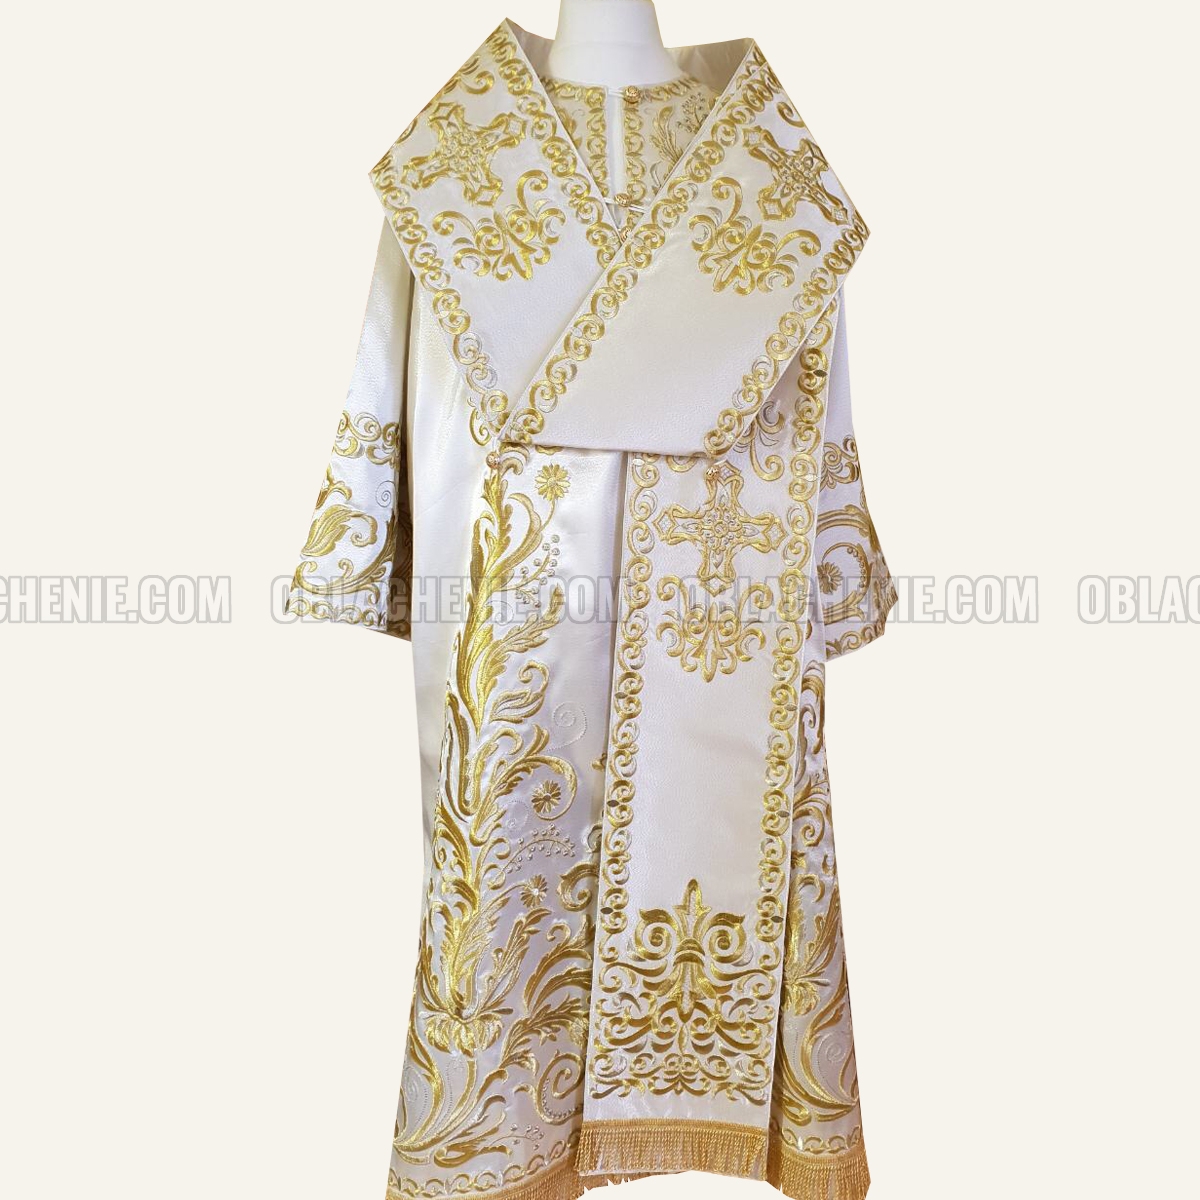 Bishop's embroidered vestments 10282